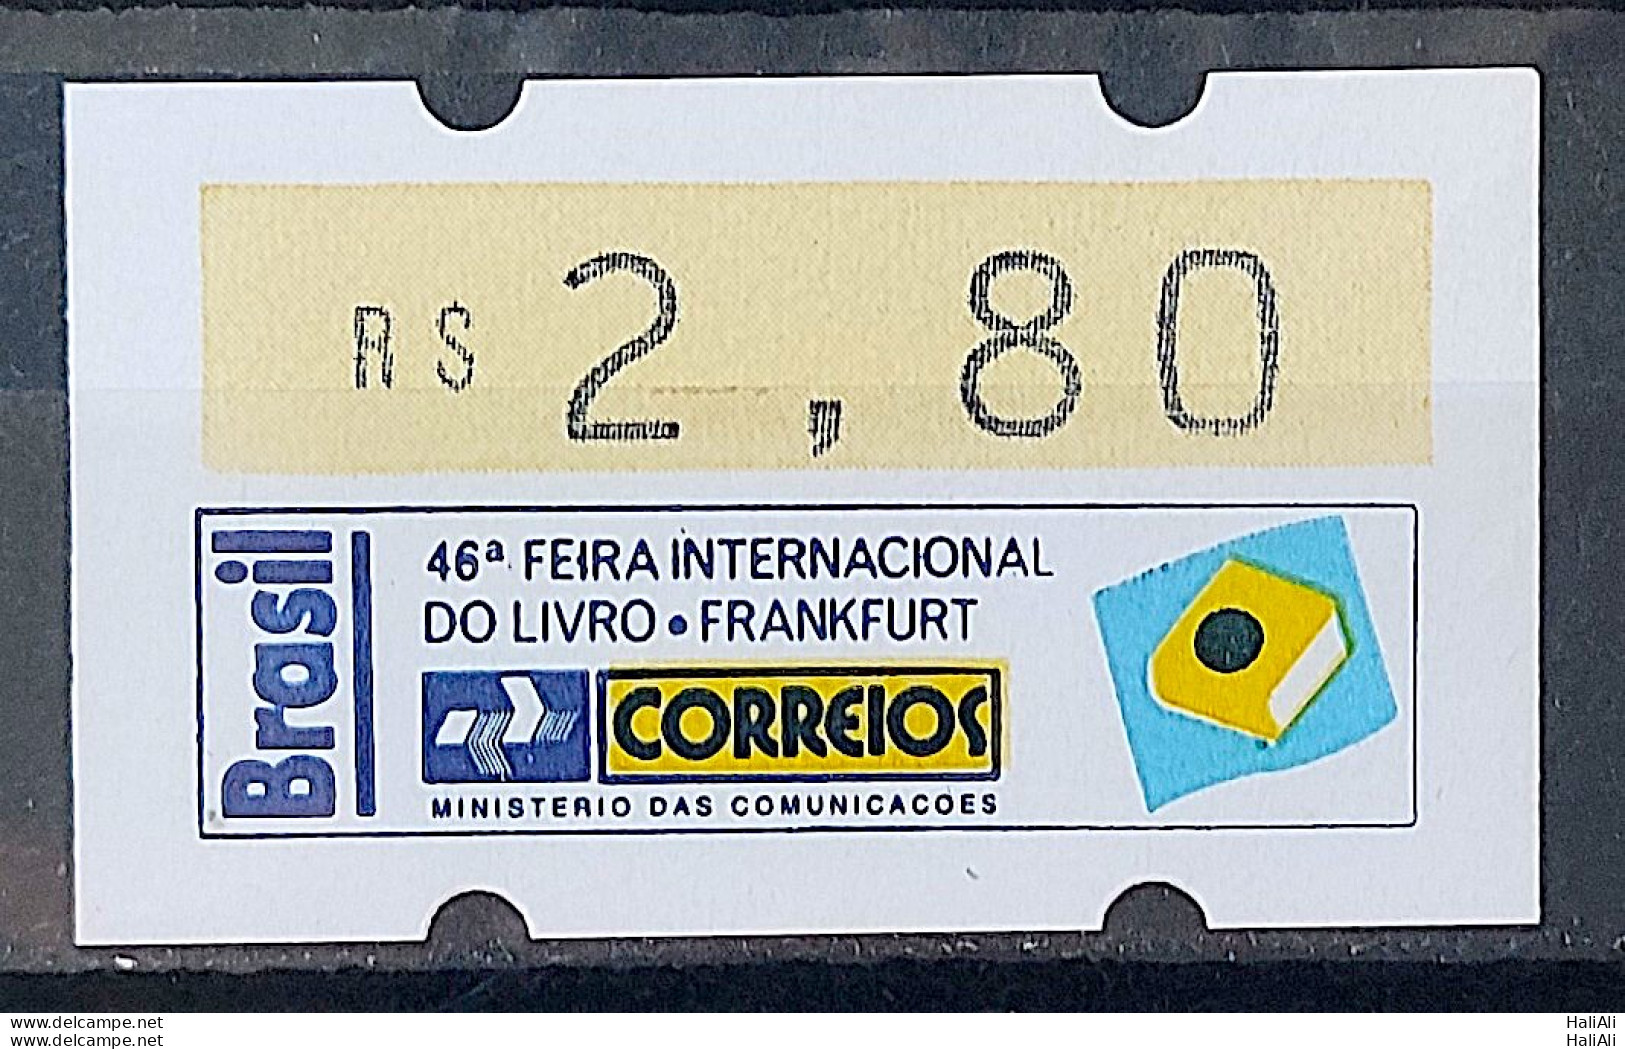 SE 06C Brazil Stamp Label Etiqueta Etichetta Automato Frankfurt 1994 - Automatenmarken (Frama)